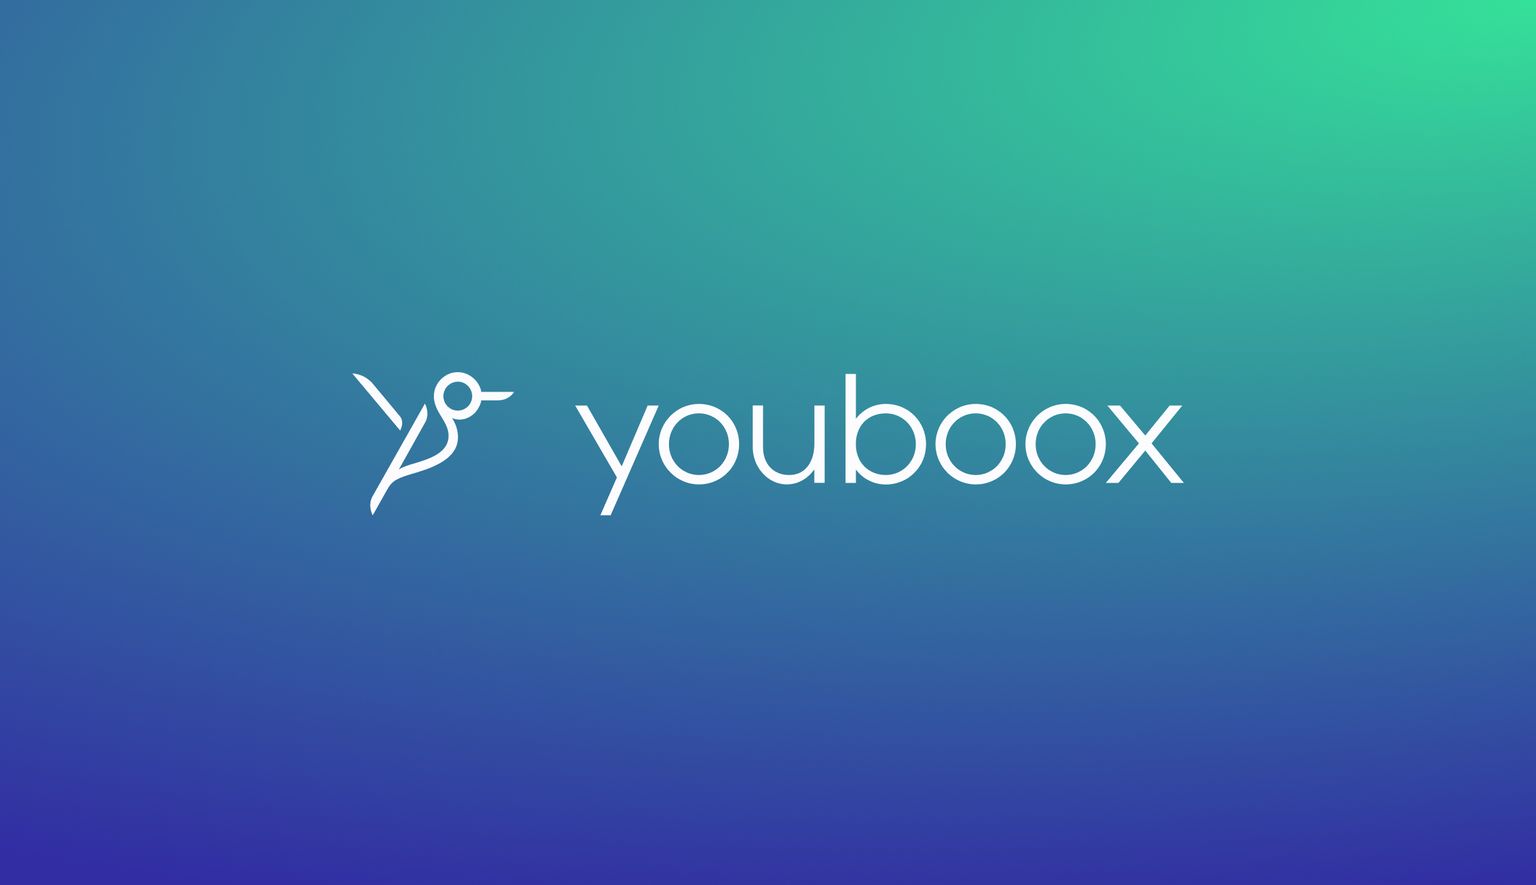 Youboox logo